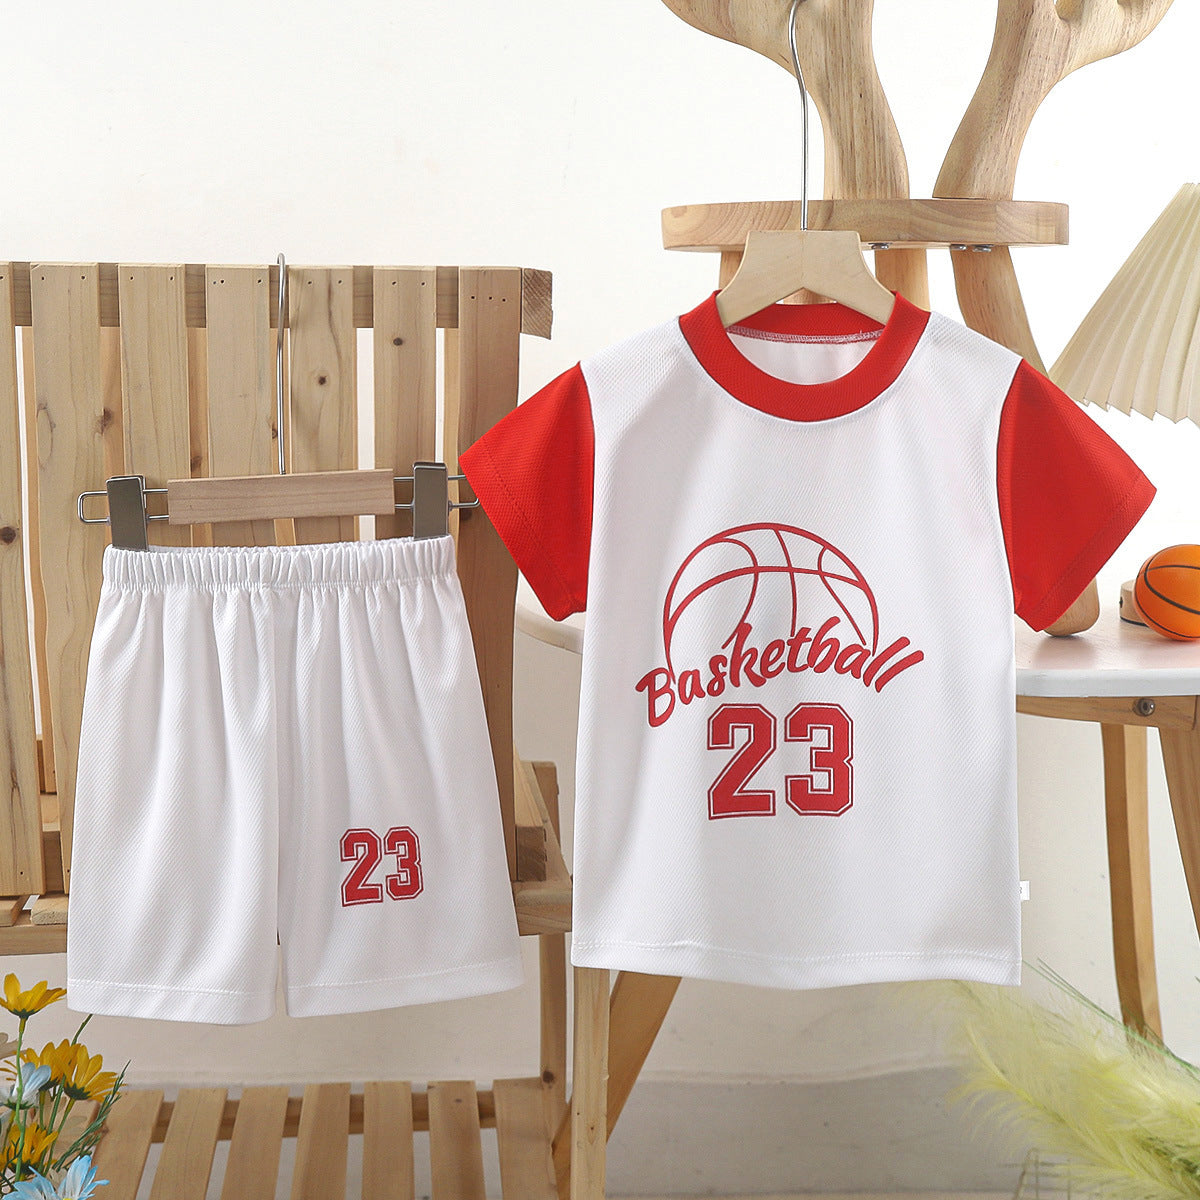 Z24060102新款兒童籃球服男寶寶夏季速乾網眼套裝中大童短袖運動童裝